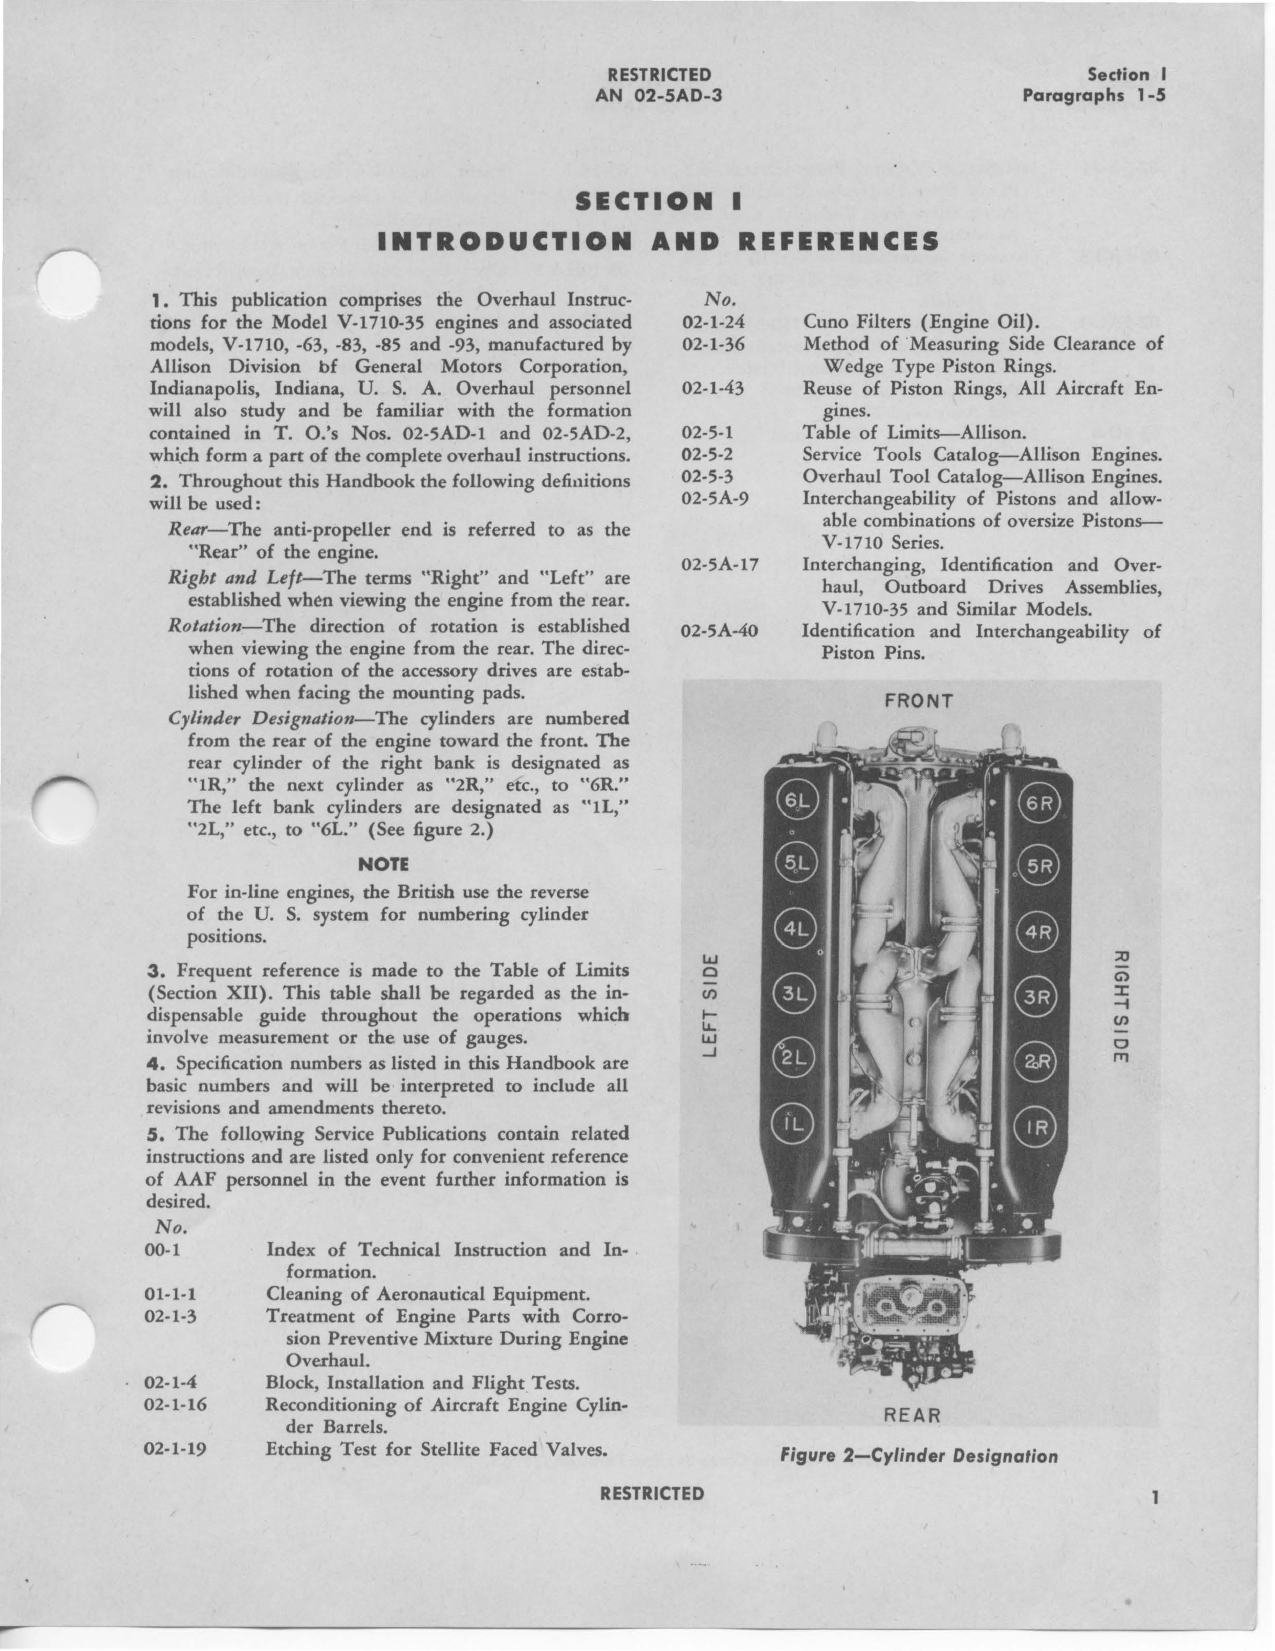 Sample page 7 from AirCorps Library document: Overhaul Instructions for V-1710-35, V-1710-63, V-1710-83, V-1710-85 and V-1710-93